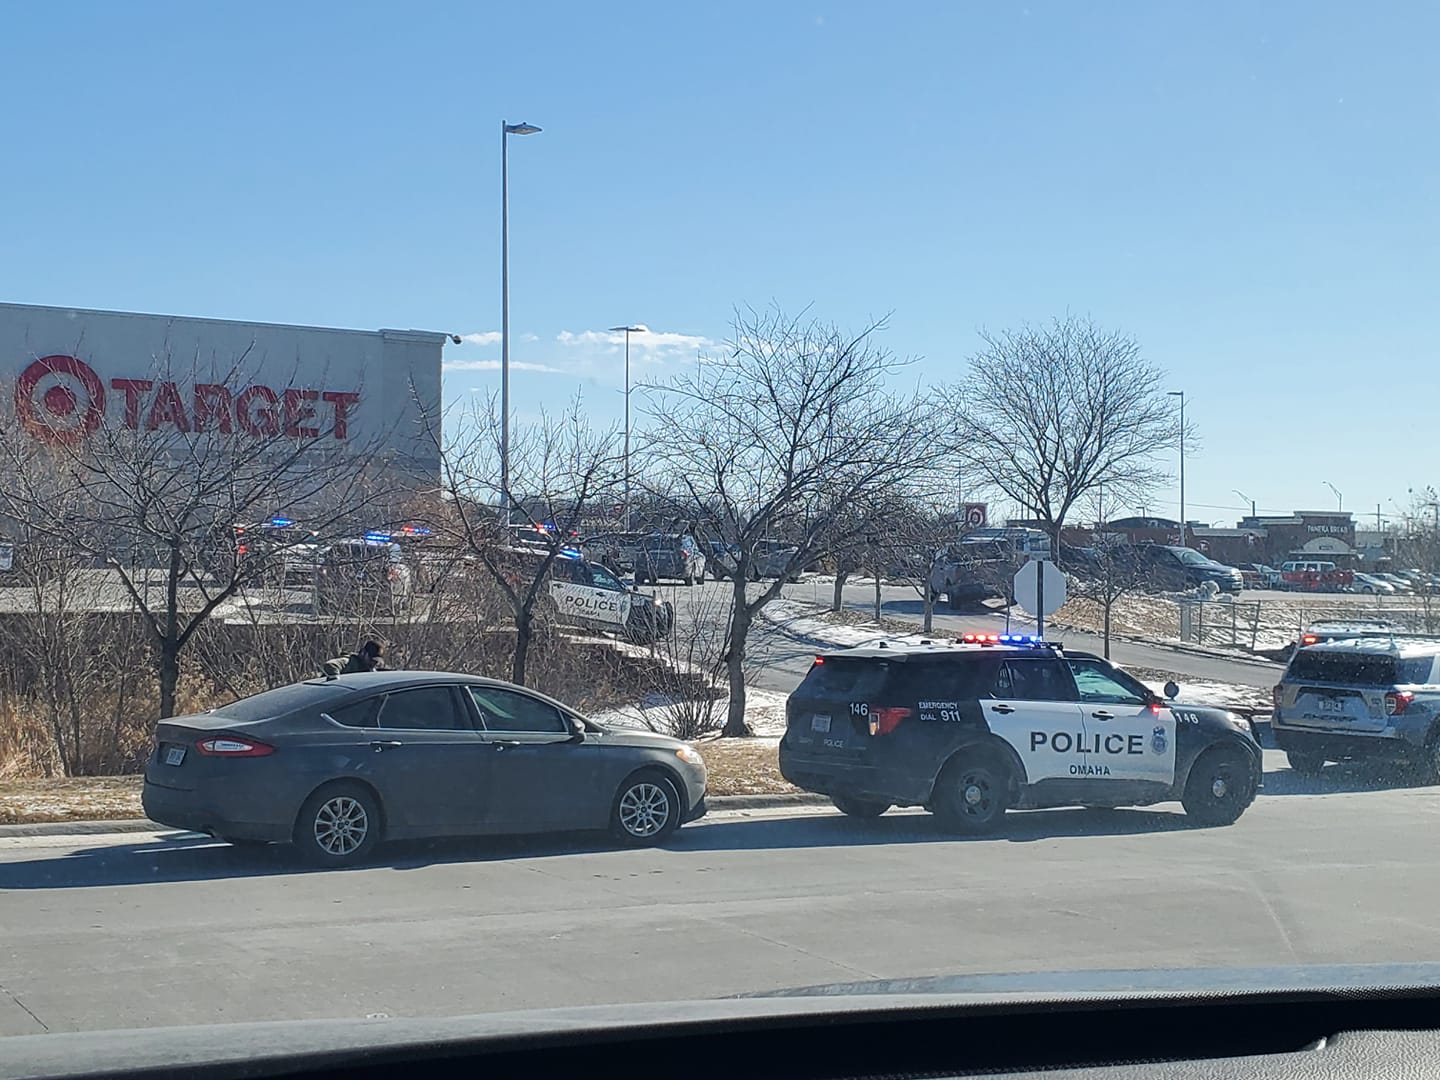 Target, Omaha, Nebraksa, USA 31 January 2023